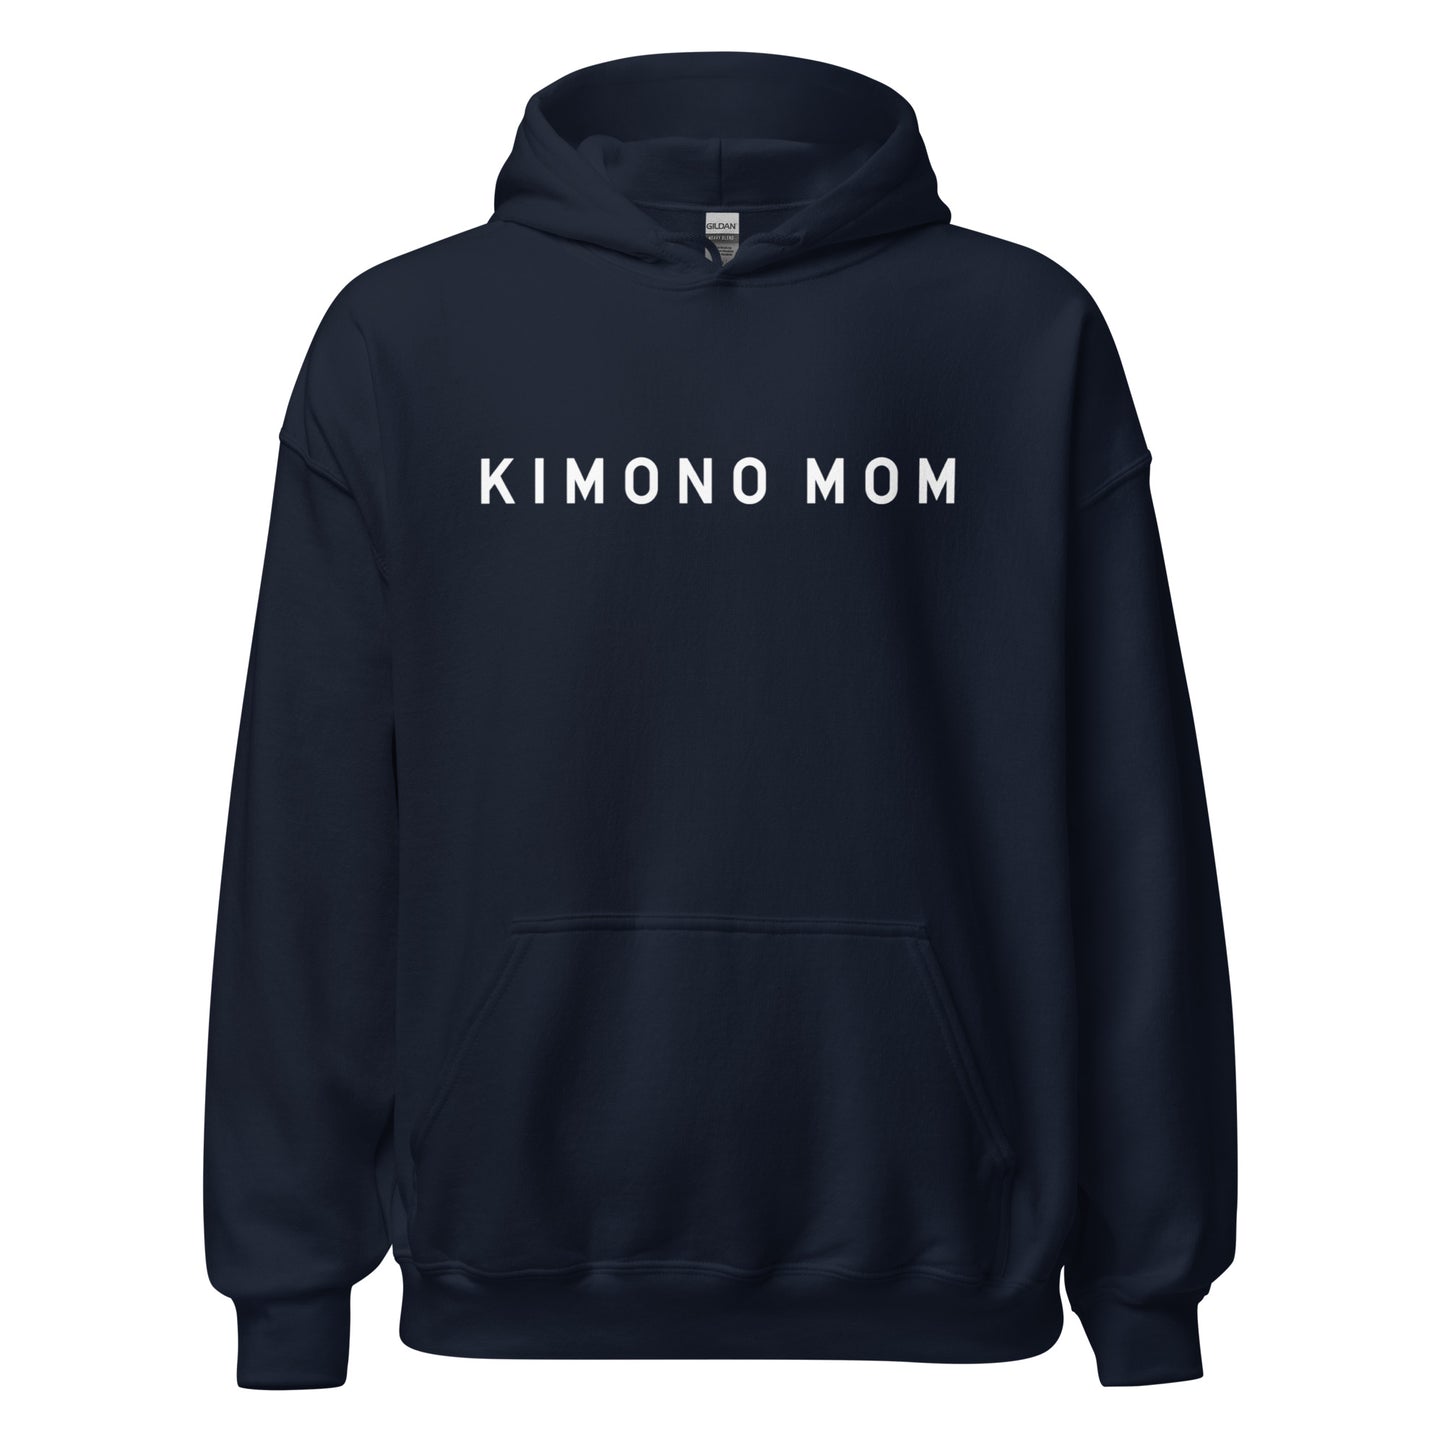 Comfort hoodie | KIMONO MOM | unisex W